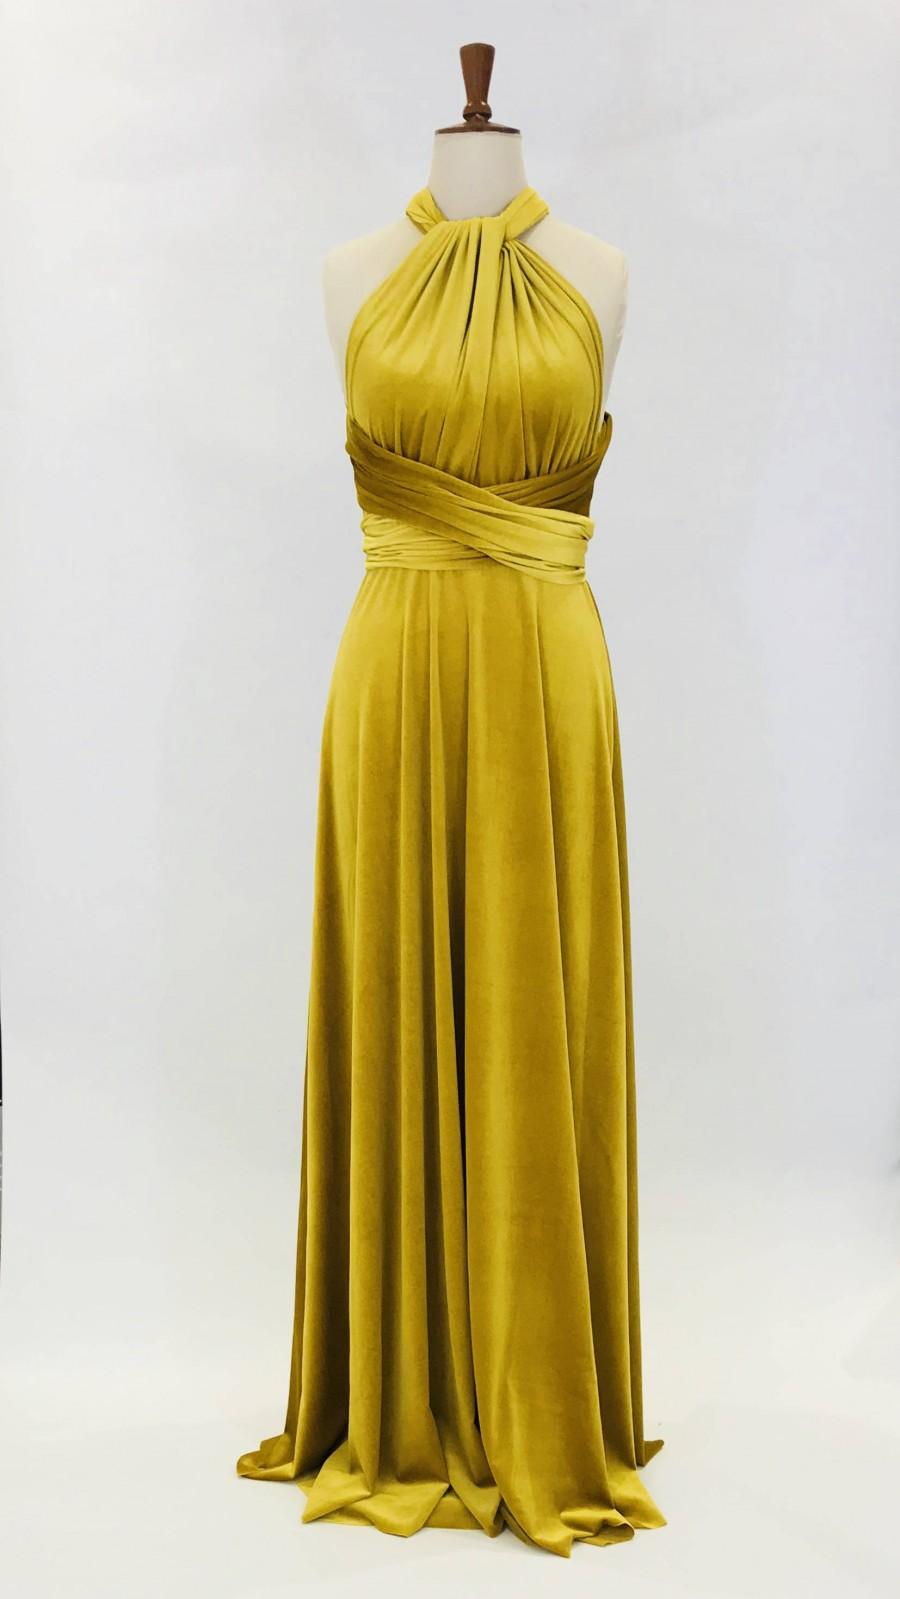 زفاف - Mustard yellow velvet dress, multiway dress, infinity dress, bridesmaid dress, prom dress, long dress, evening dress, convertible dress